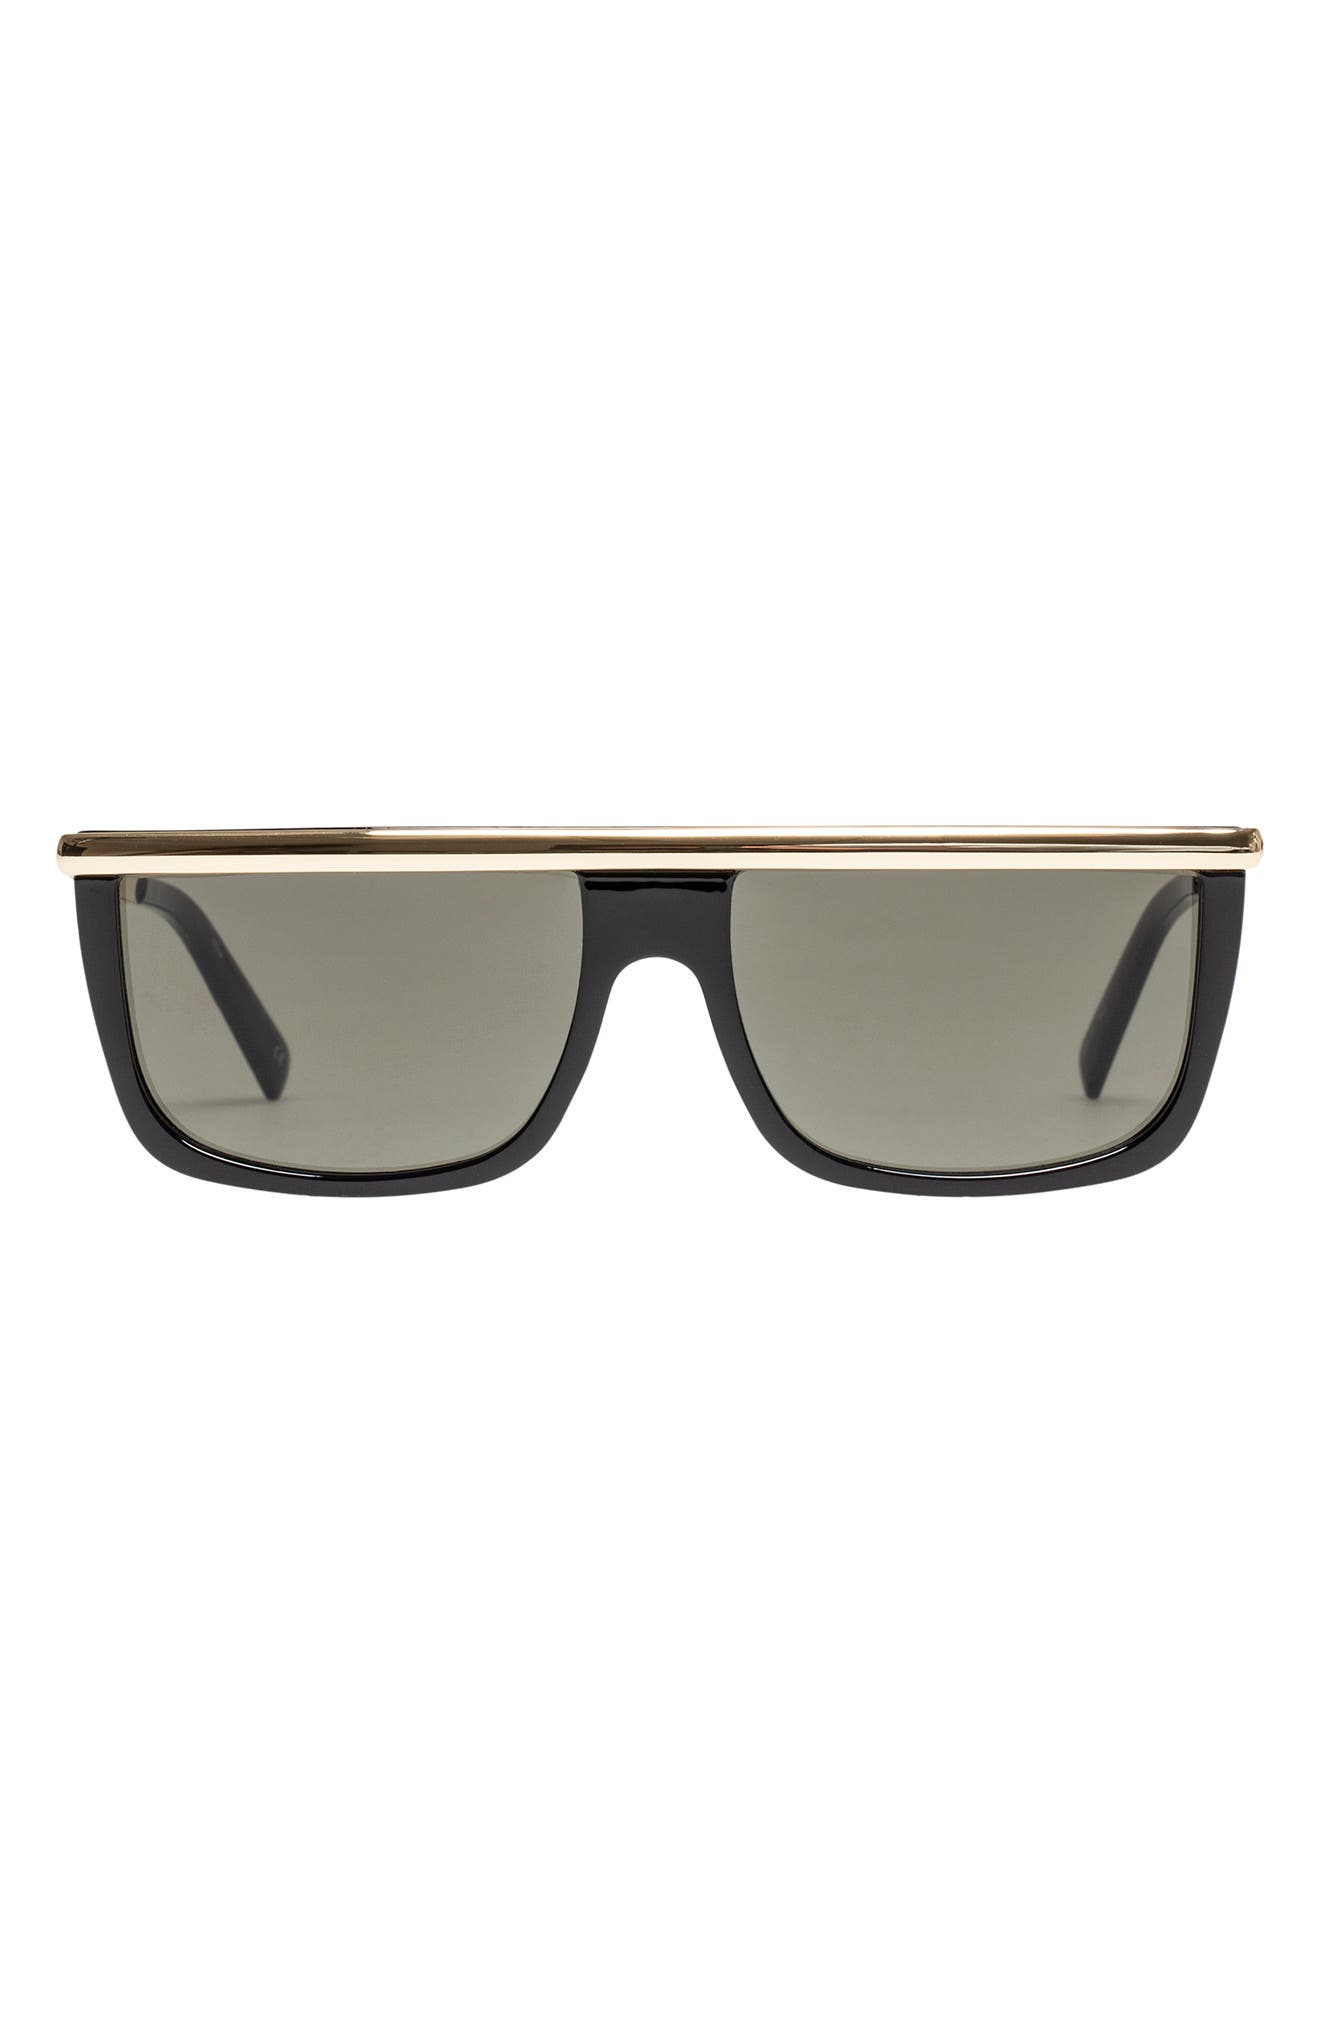 Le Specs Hydromatic 58mm Square Sunglasses in Black/Gold/Khaki at Nordstrom